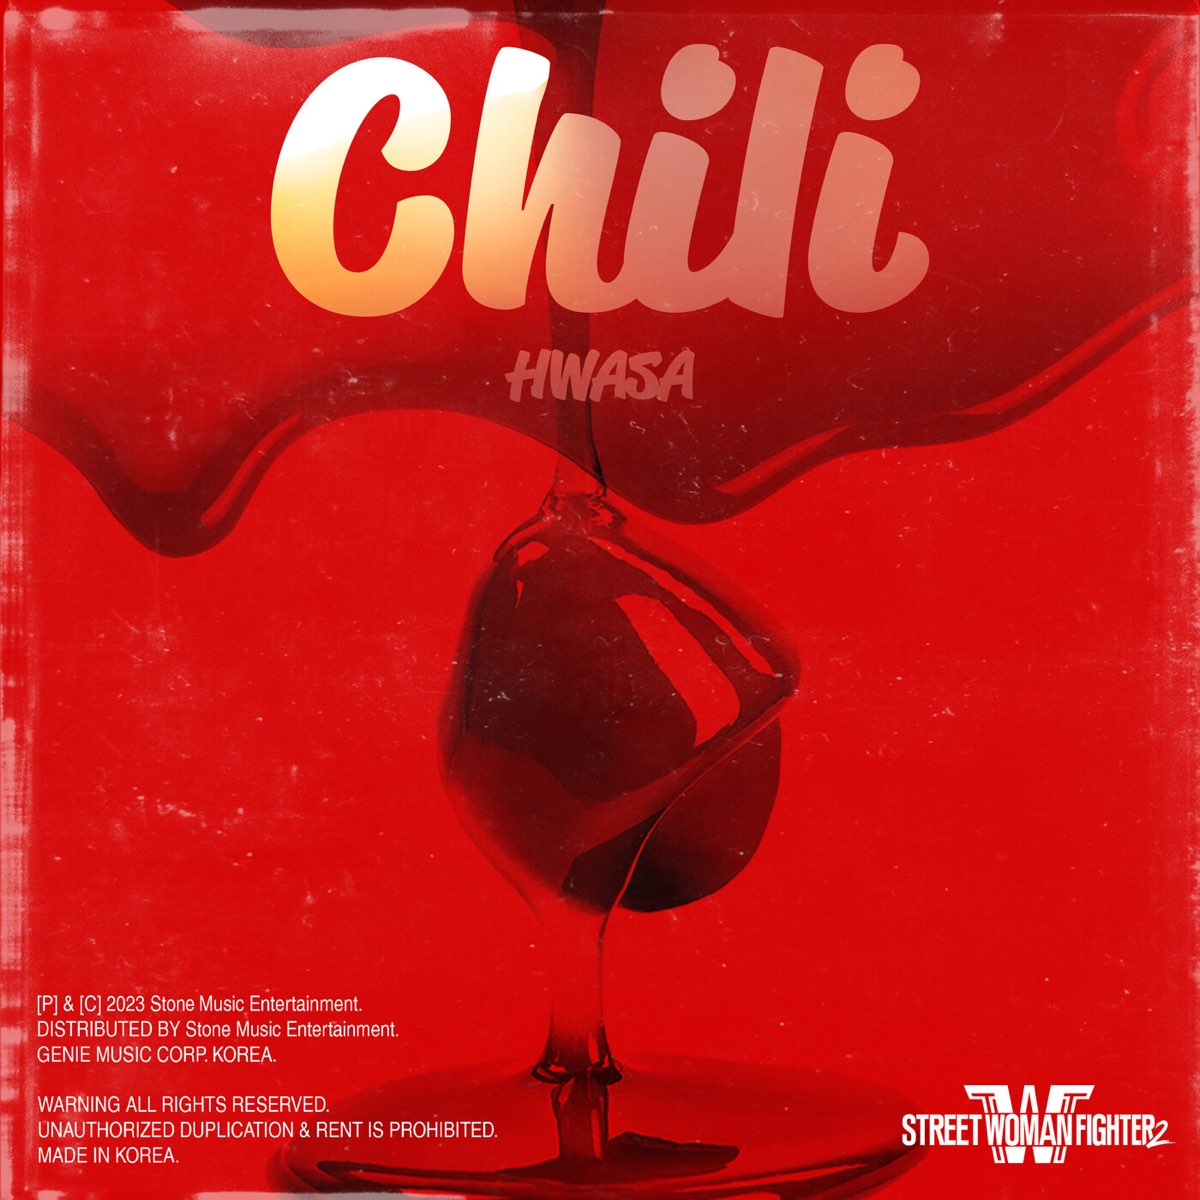 ‎Chili - Single - Album by HWASA - Apple Music